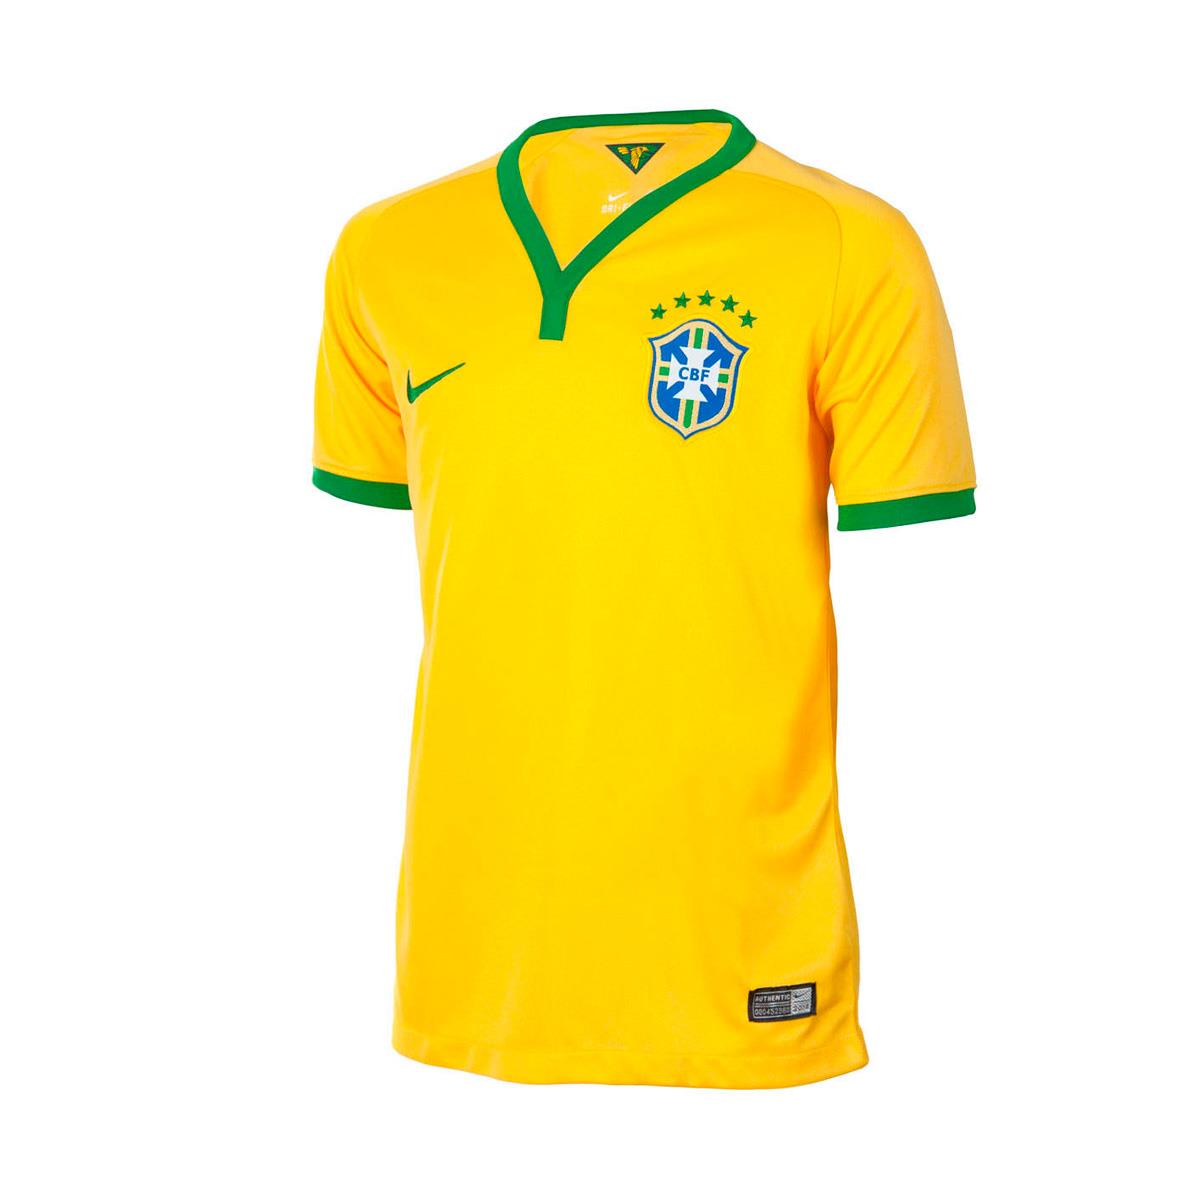 Camisa Feminina Internacional Oficial Nike 2014 Amarela - Zafielo